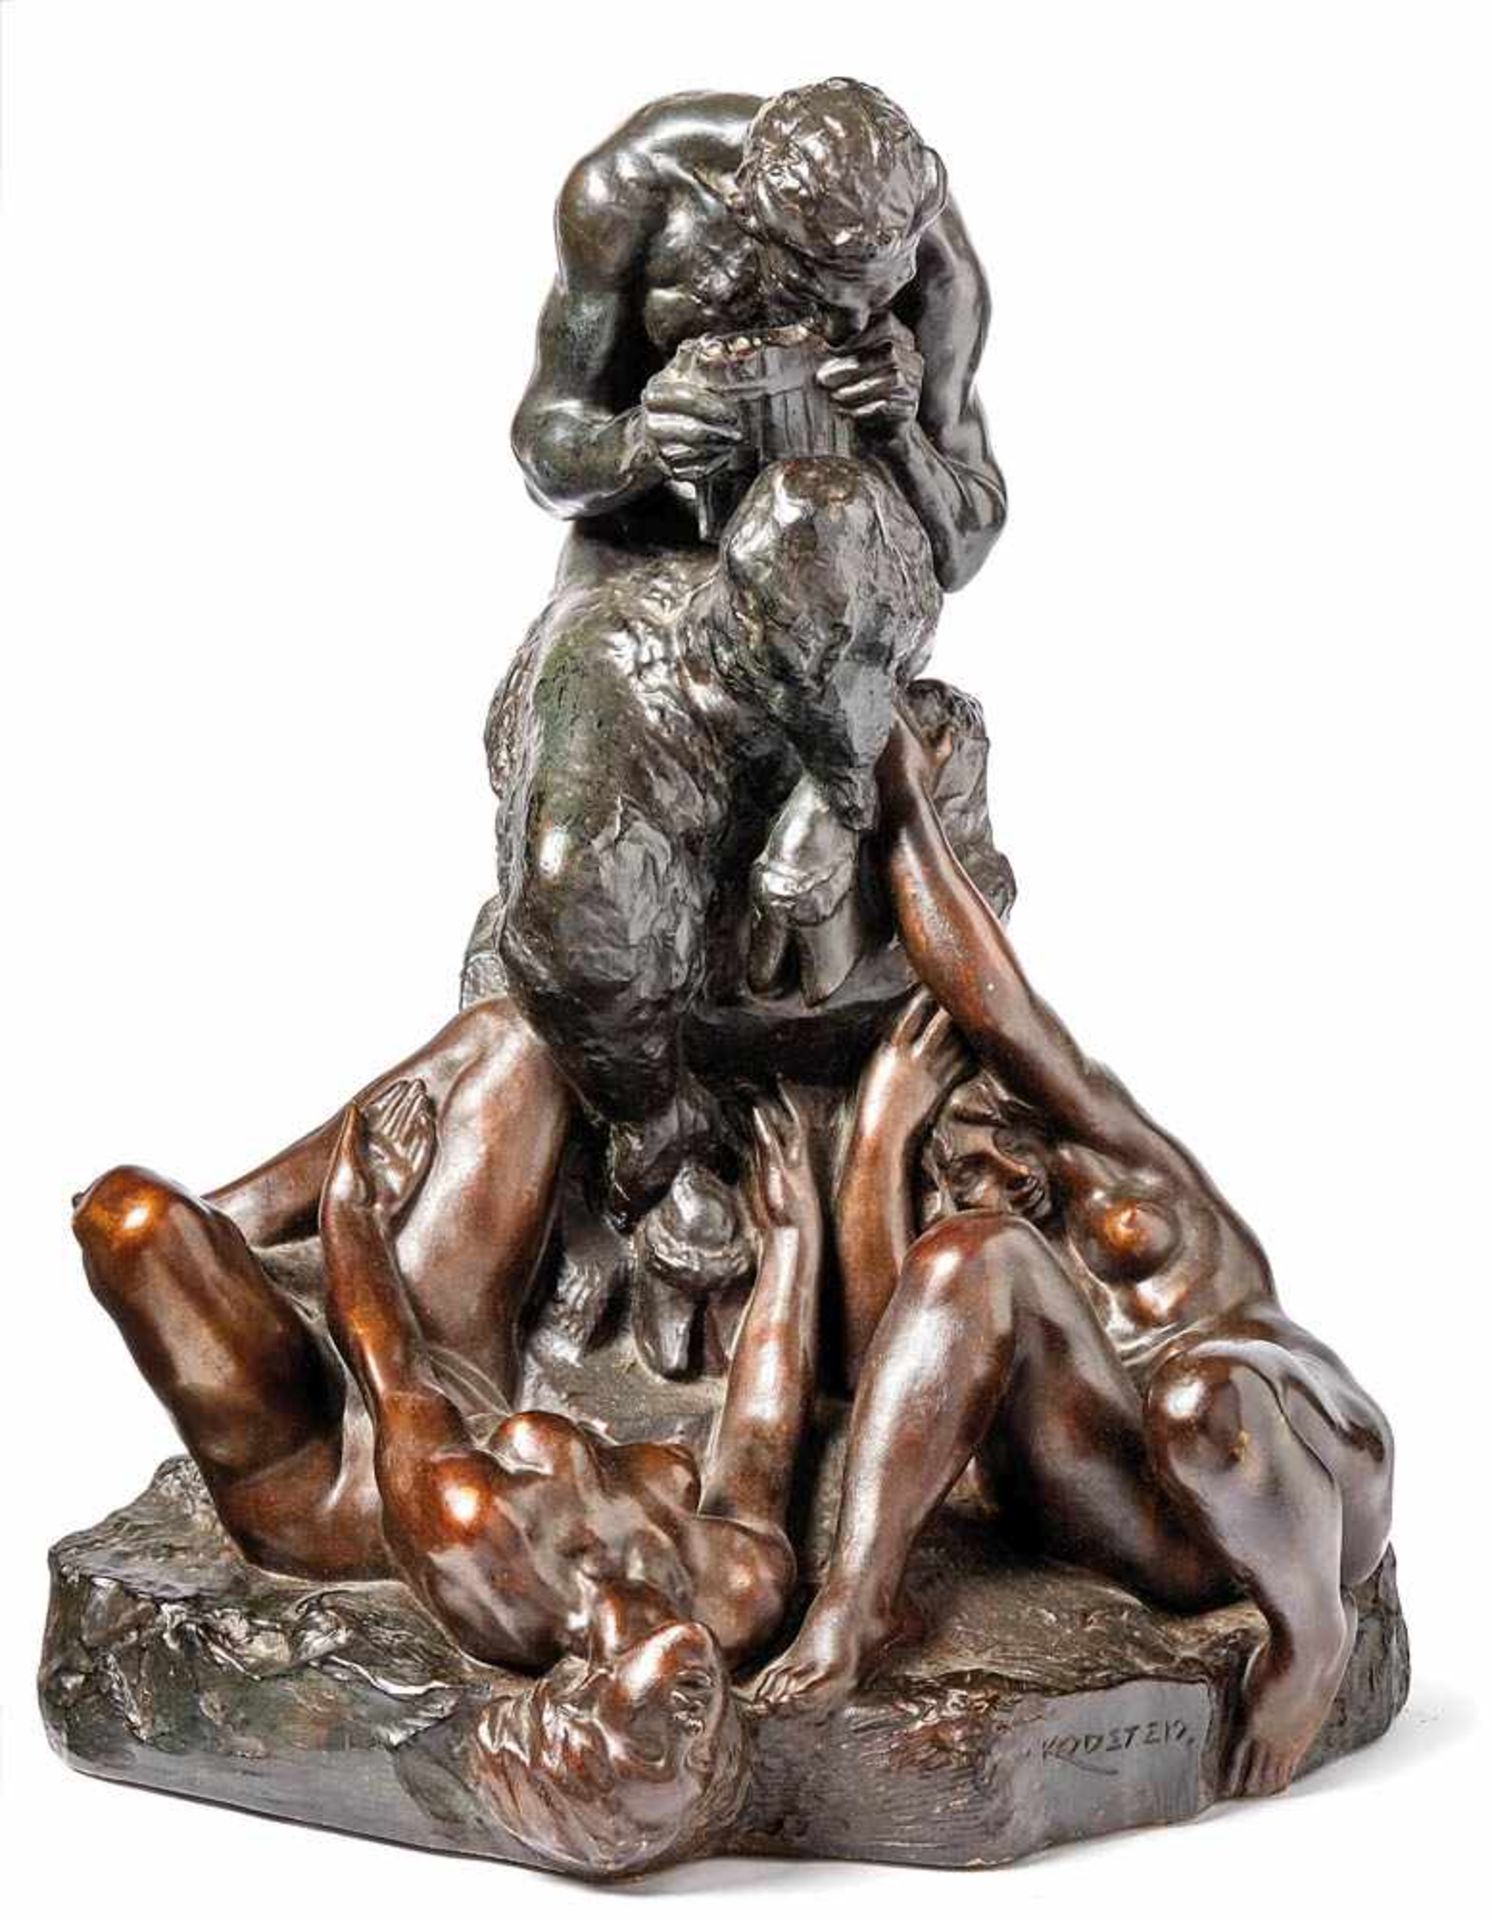 Kodet, EmanuelFaun and Nymphs(1880-1954) Faun sitting on a natural pedestal playing a panpipe, two